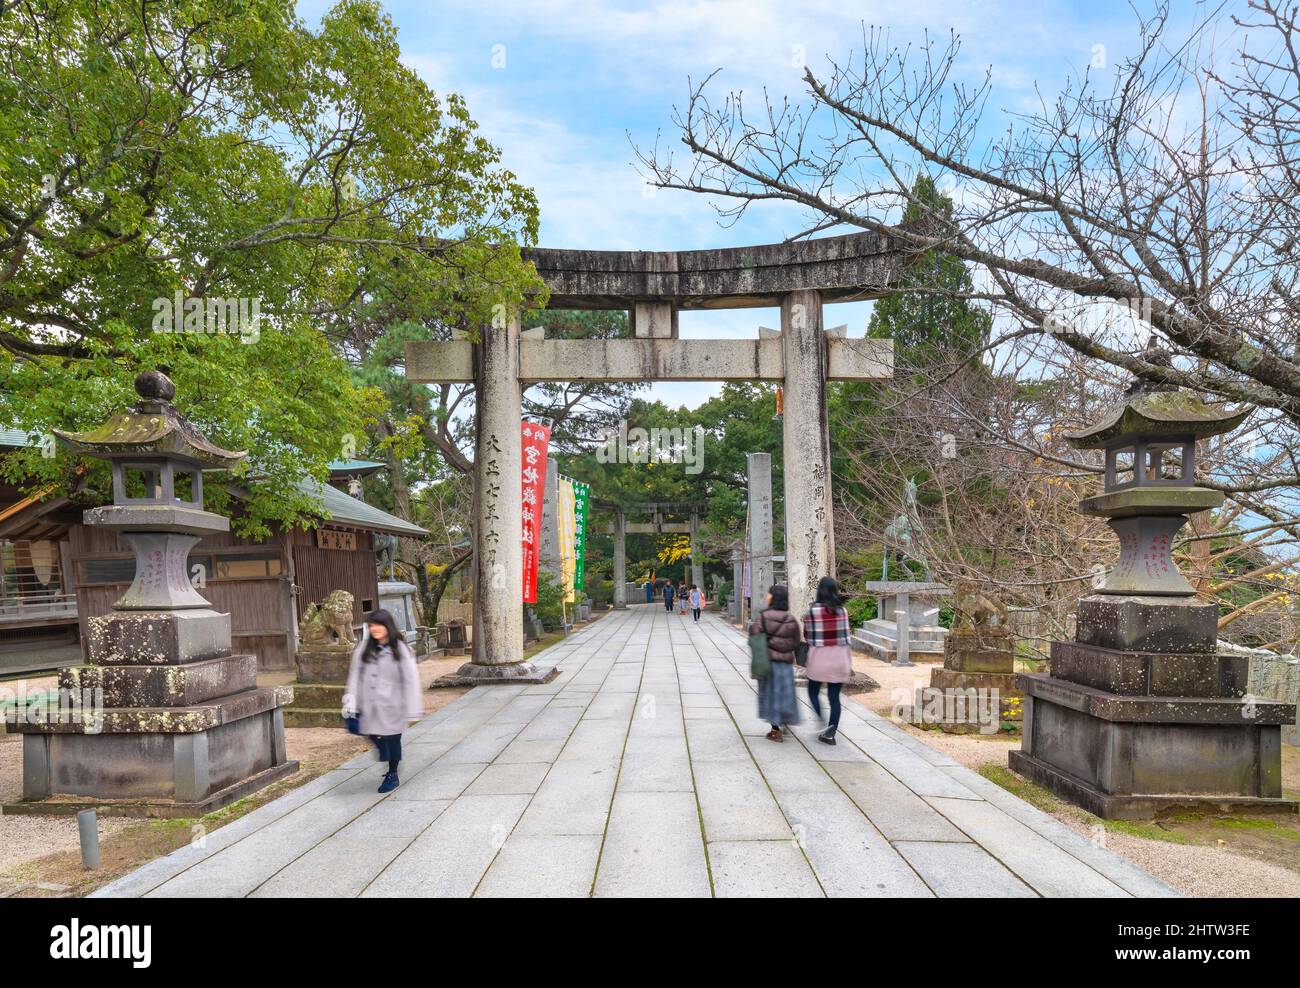 kyushu, japan - december 08 2021: Japanese tourists strolling along the sacred sandō path of Miyajidake Shrine surrounded by stone lanterns and komain Stock Photo